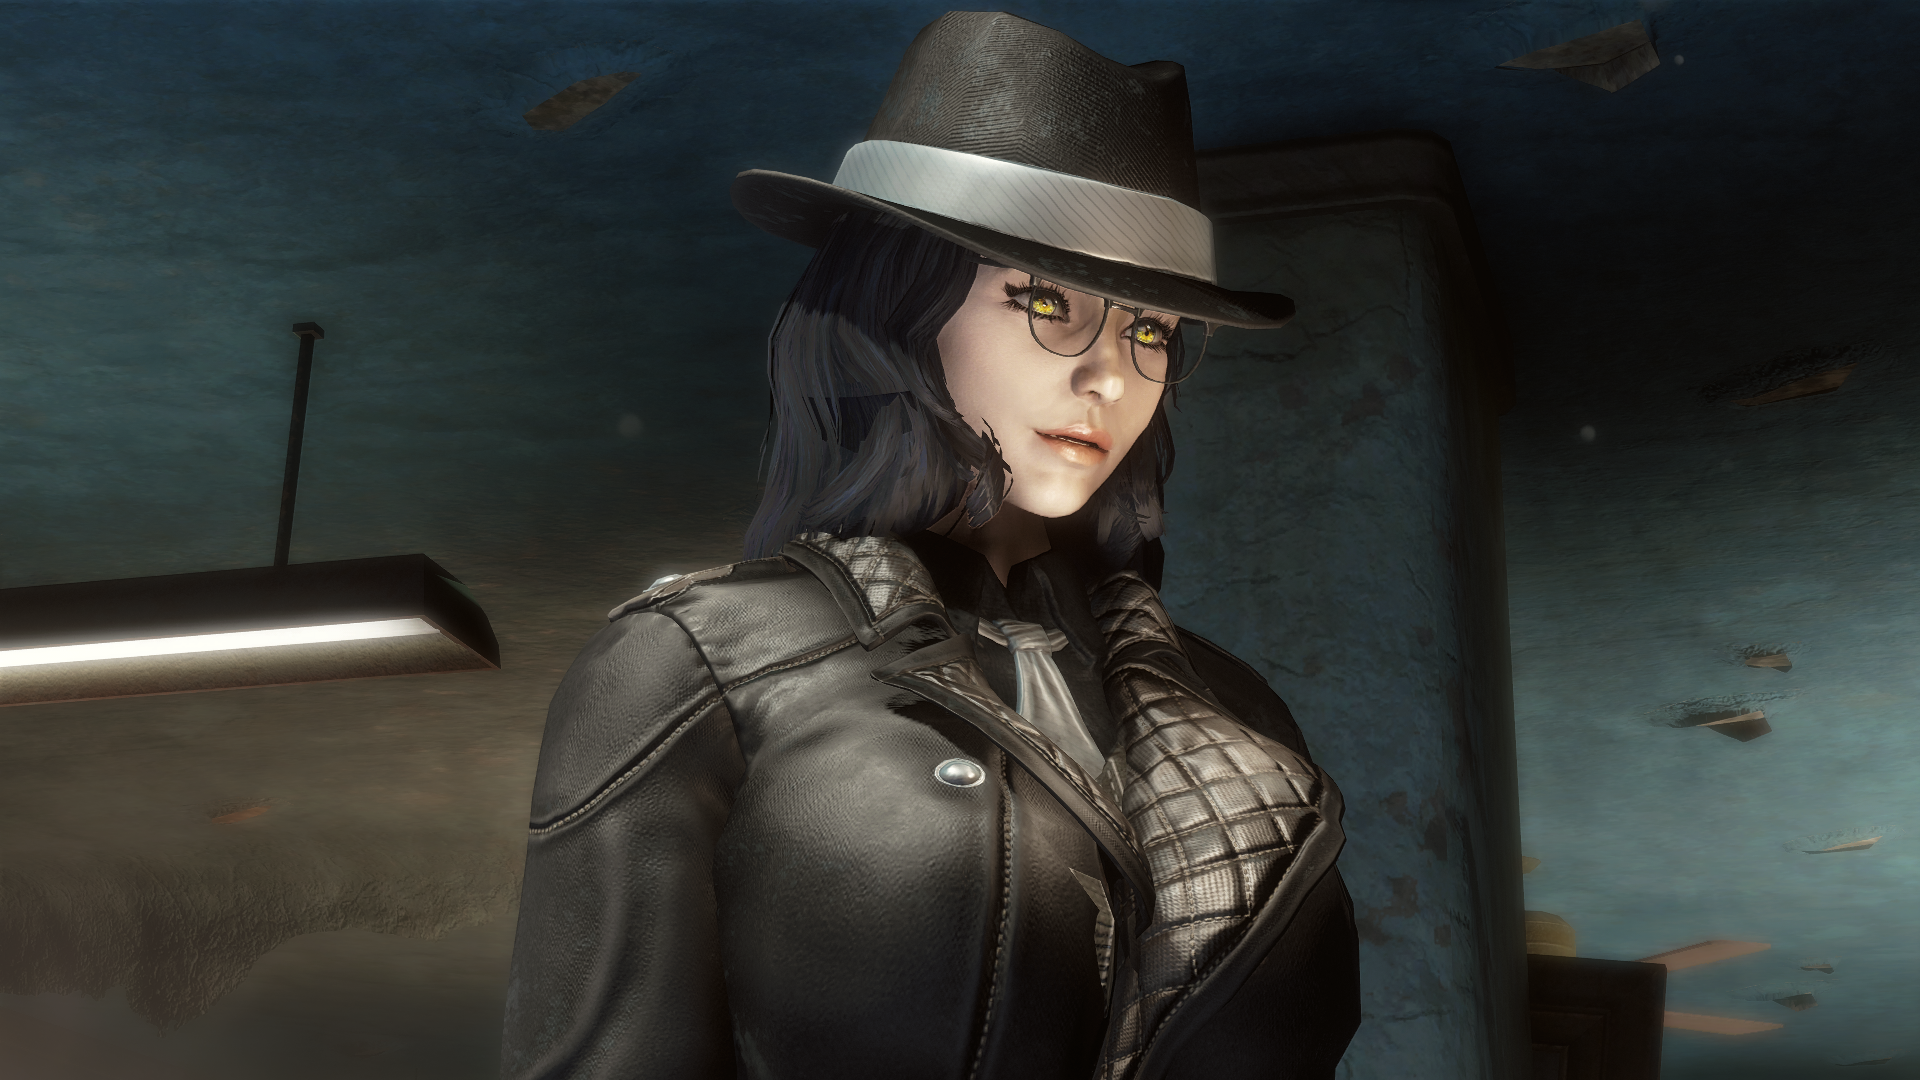 Cute Mafia Girl at Fallout 4 Nexus and community